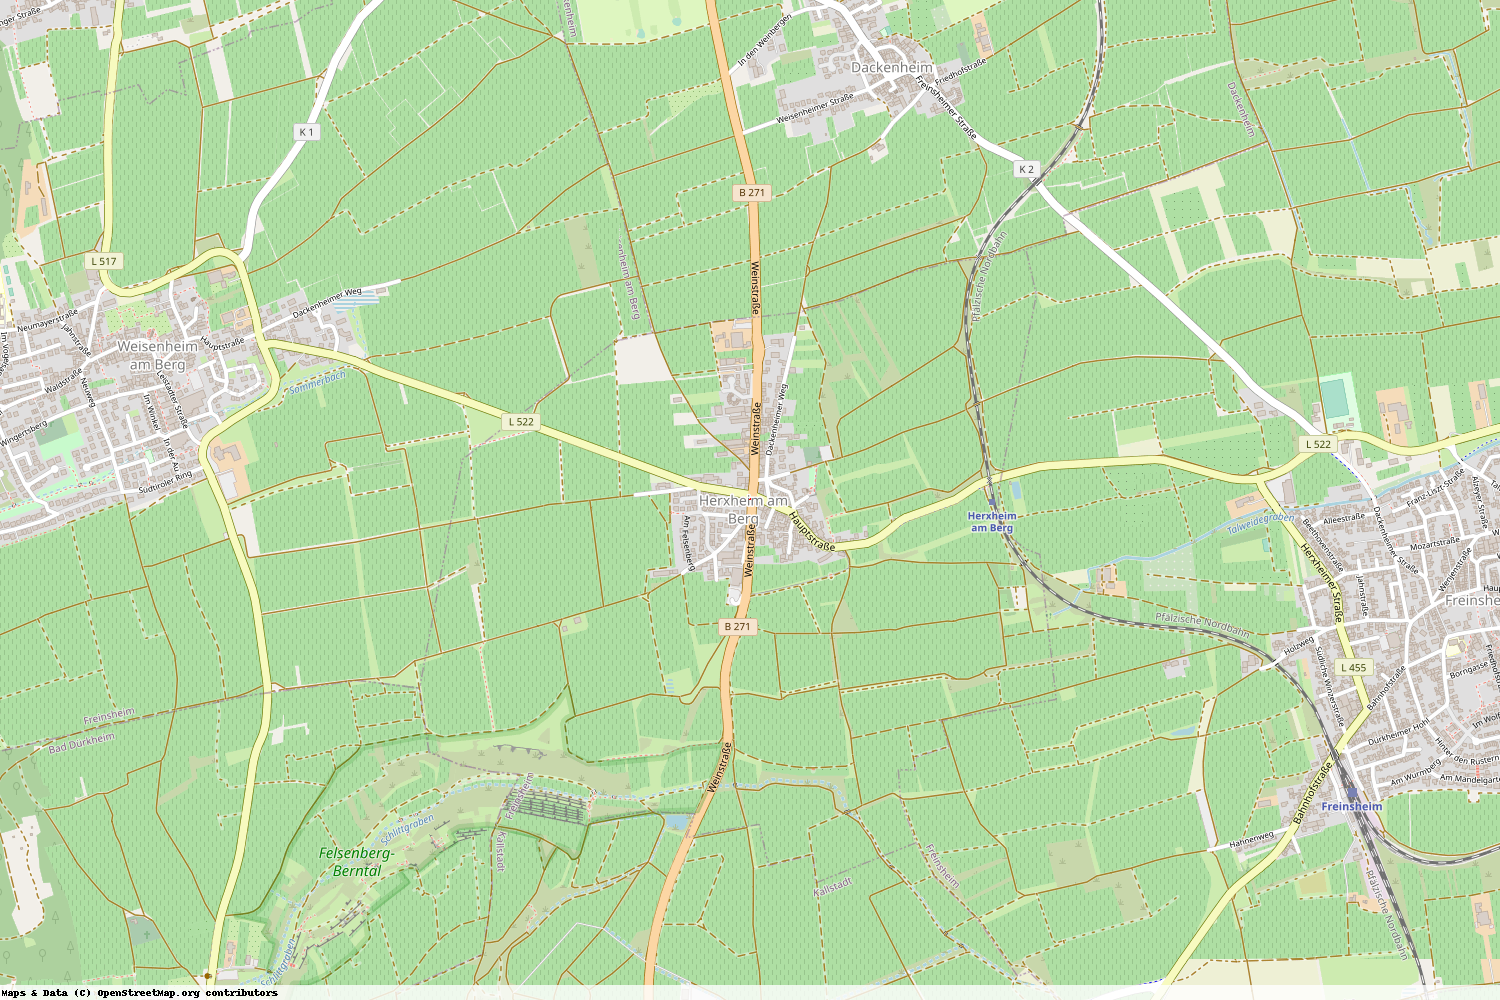 Ist gerade Stromausfall in Rheinland-Pfalz - Bad Dürkheim - Herxheim am Berg?